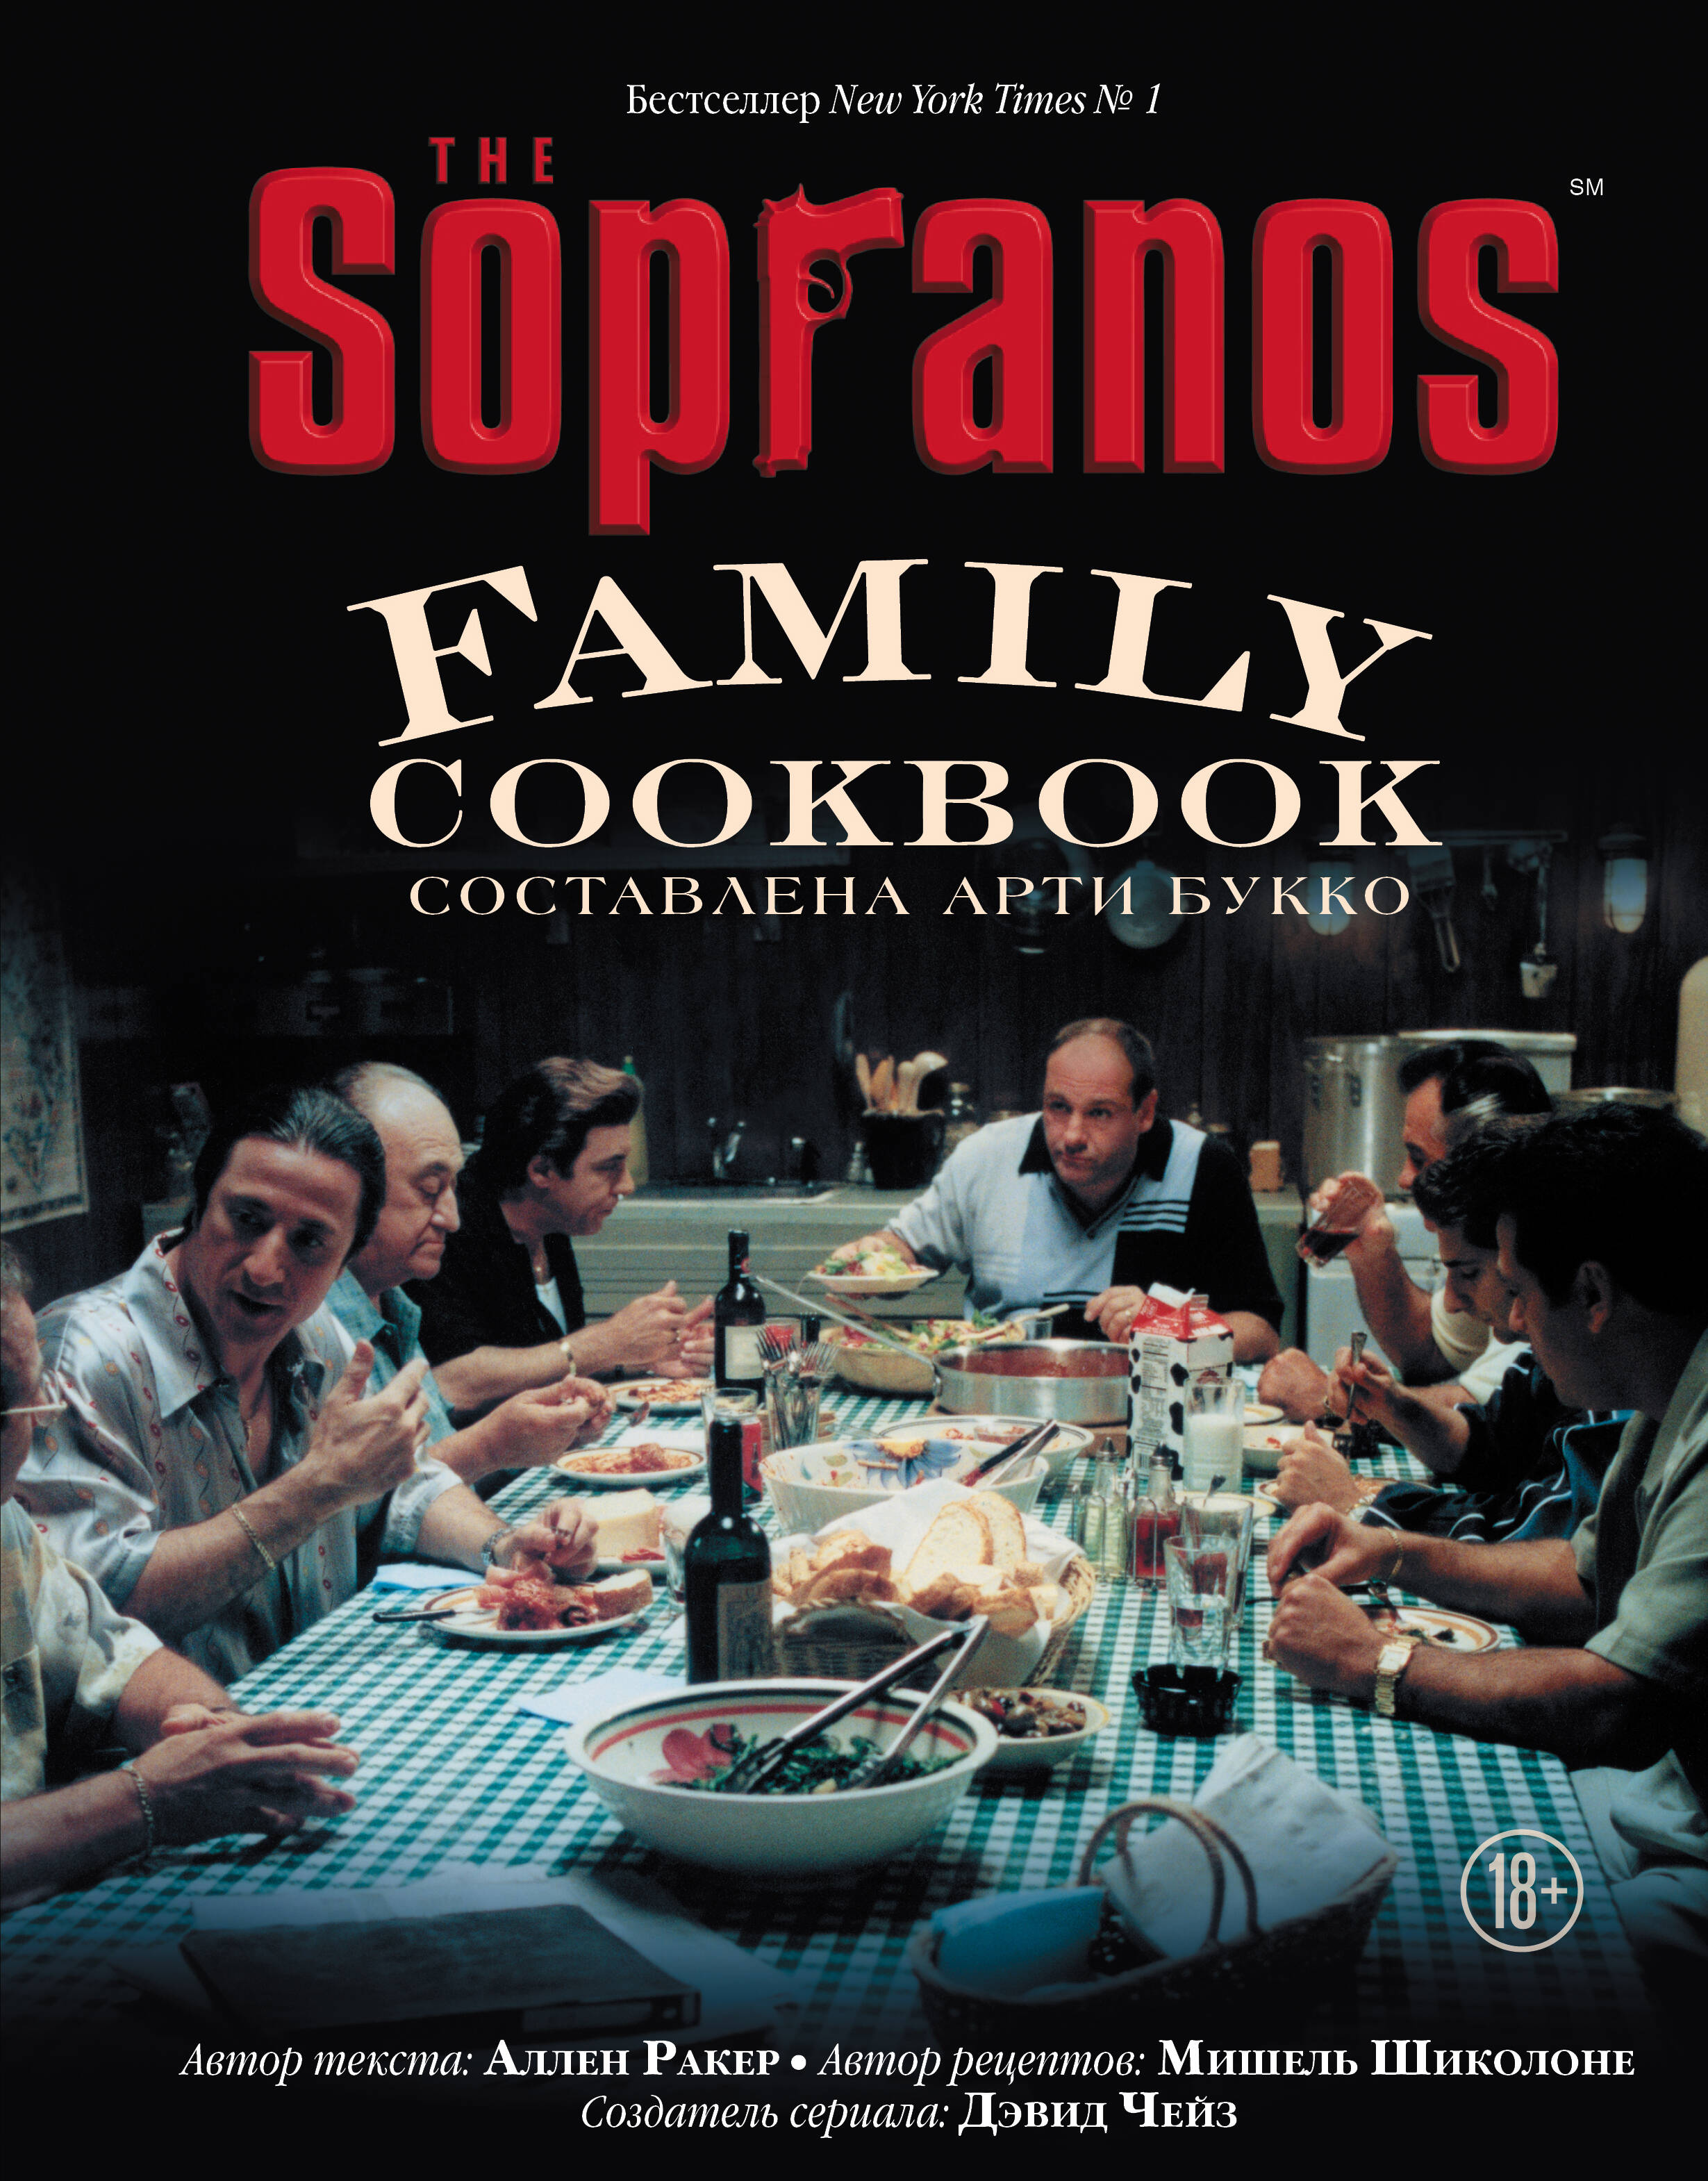 Букко Арти The Sopranos Family Cookbook thomson claire national trust family cookbook